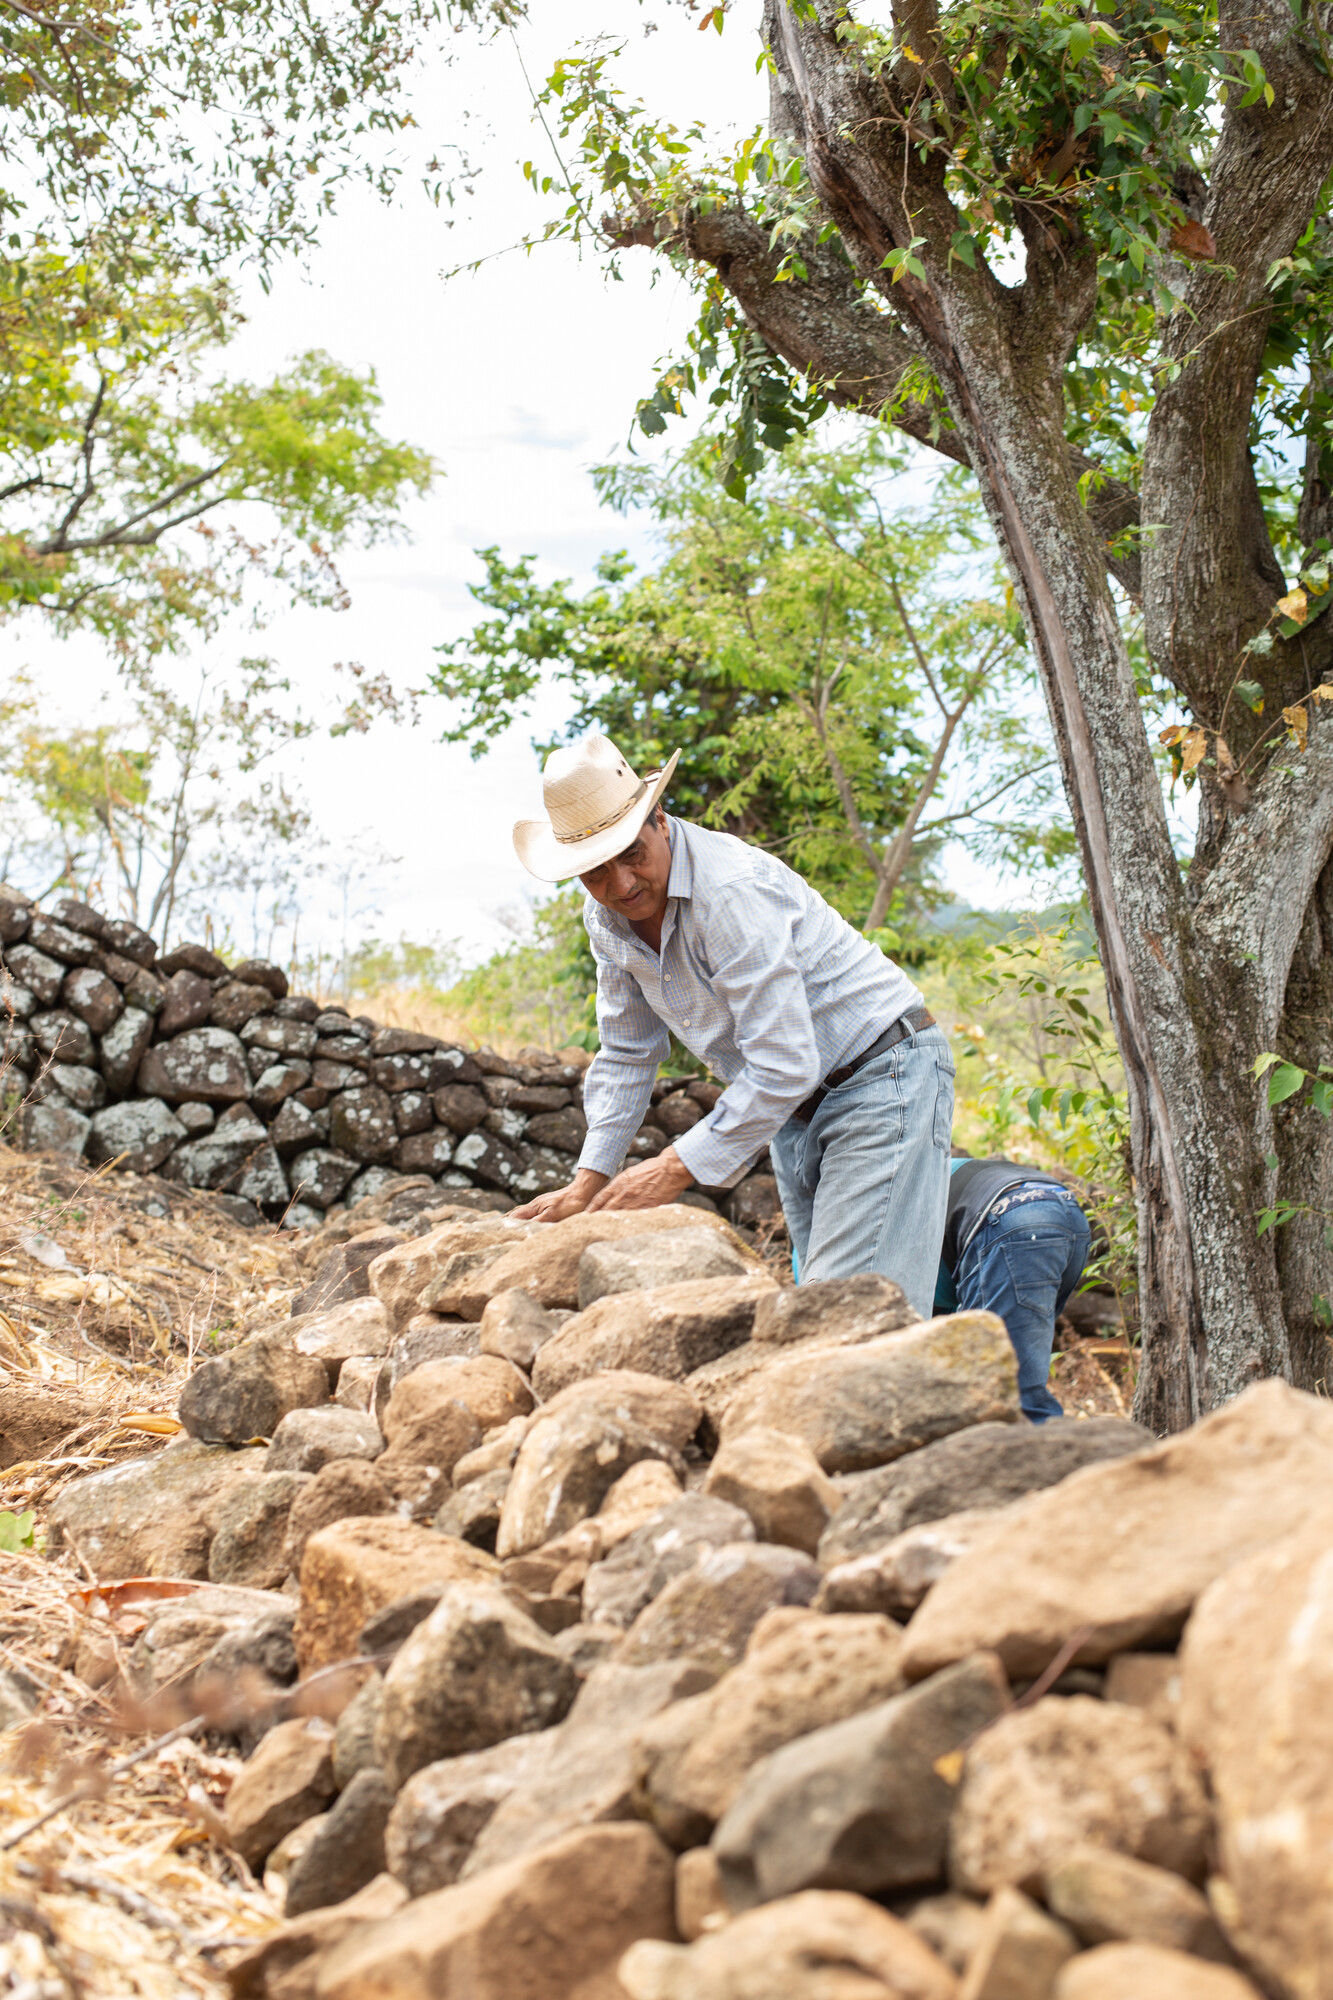 A Honduran farmer in a white cowboy hat works on a field stone erosion barrier